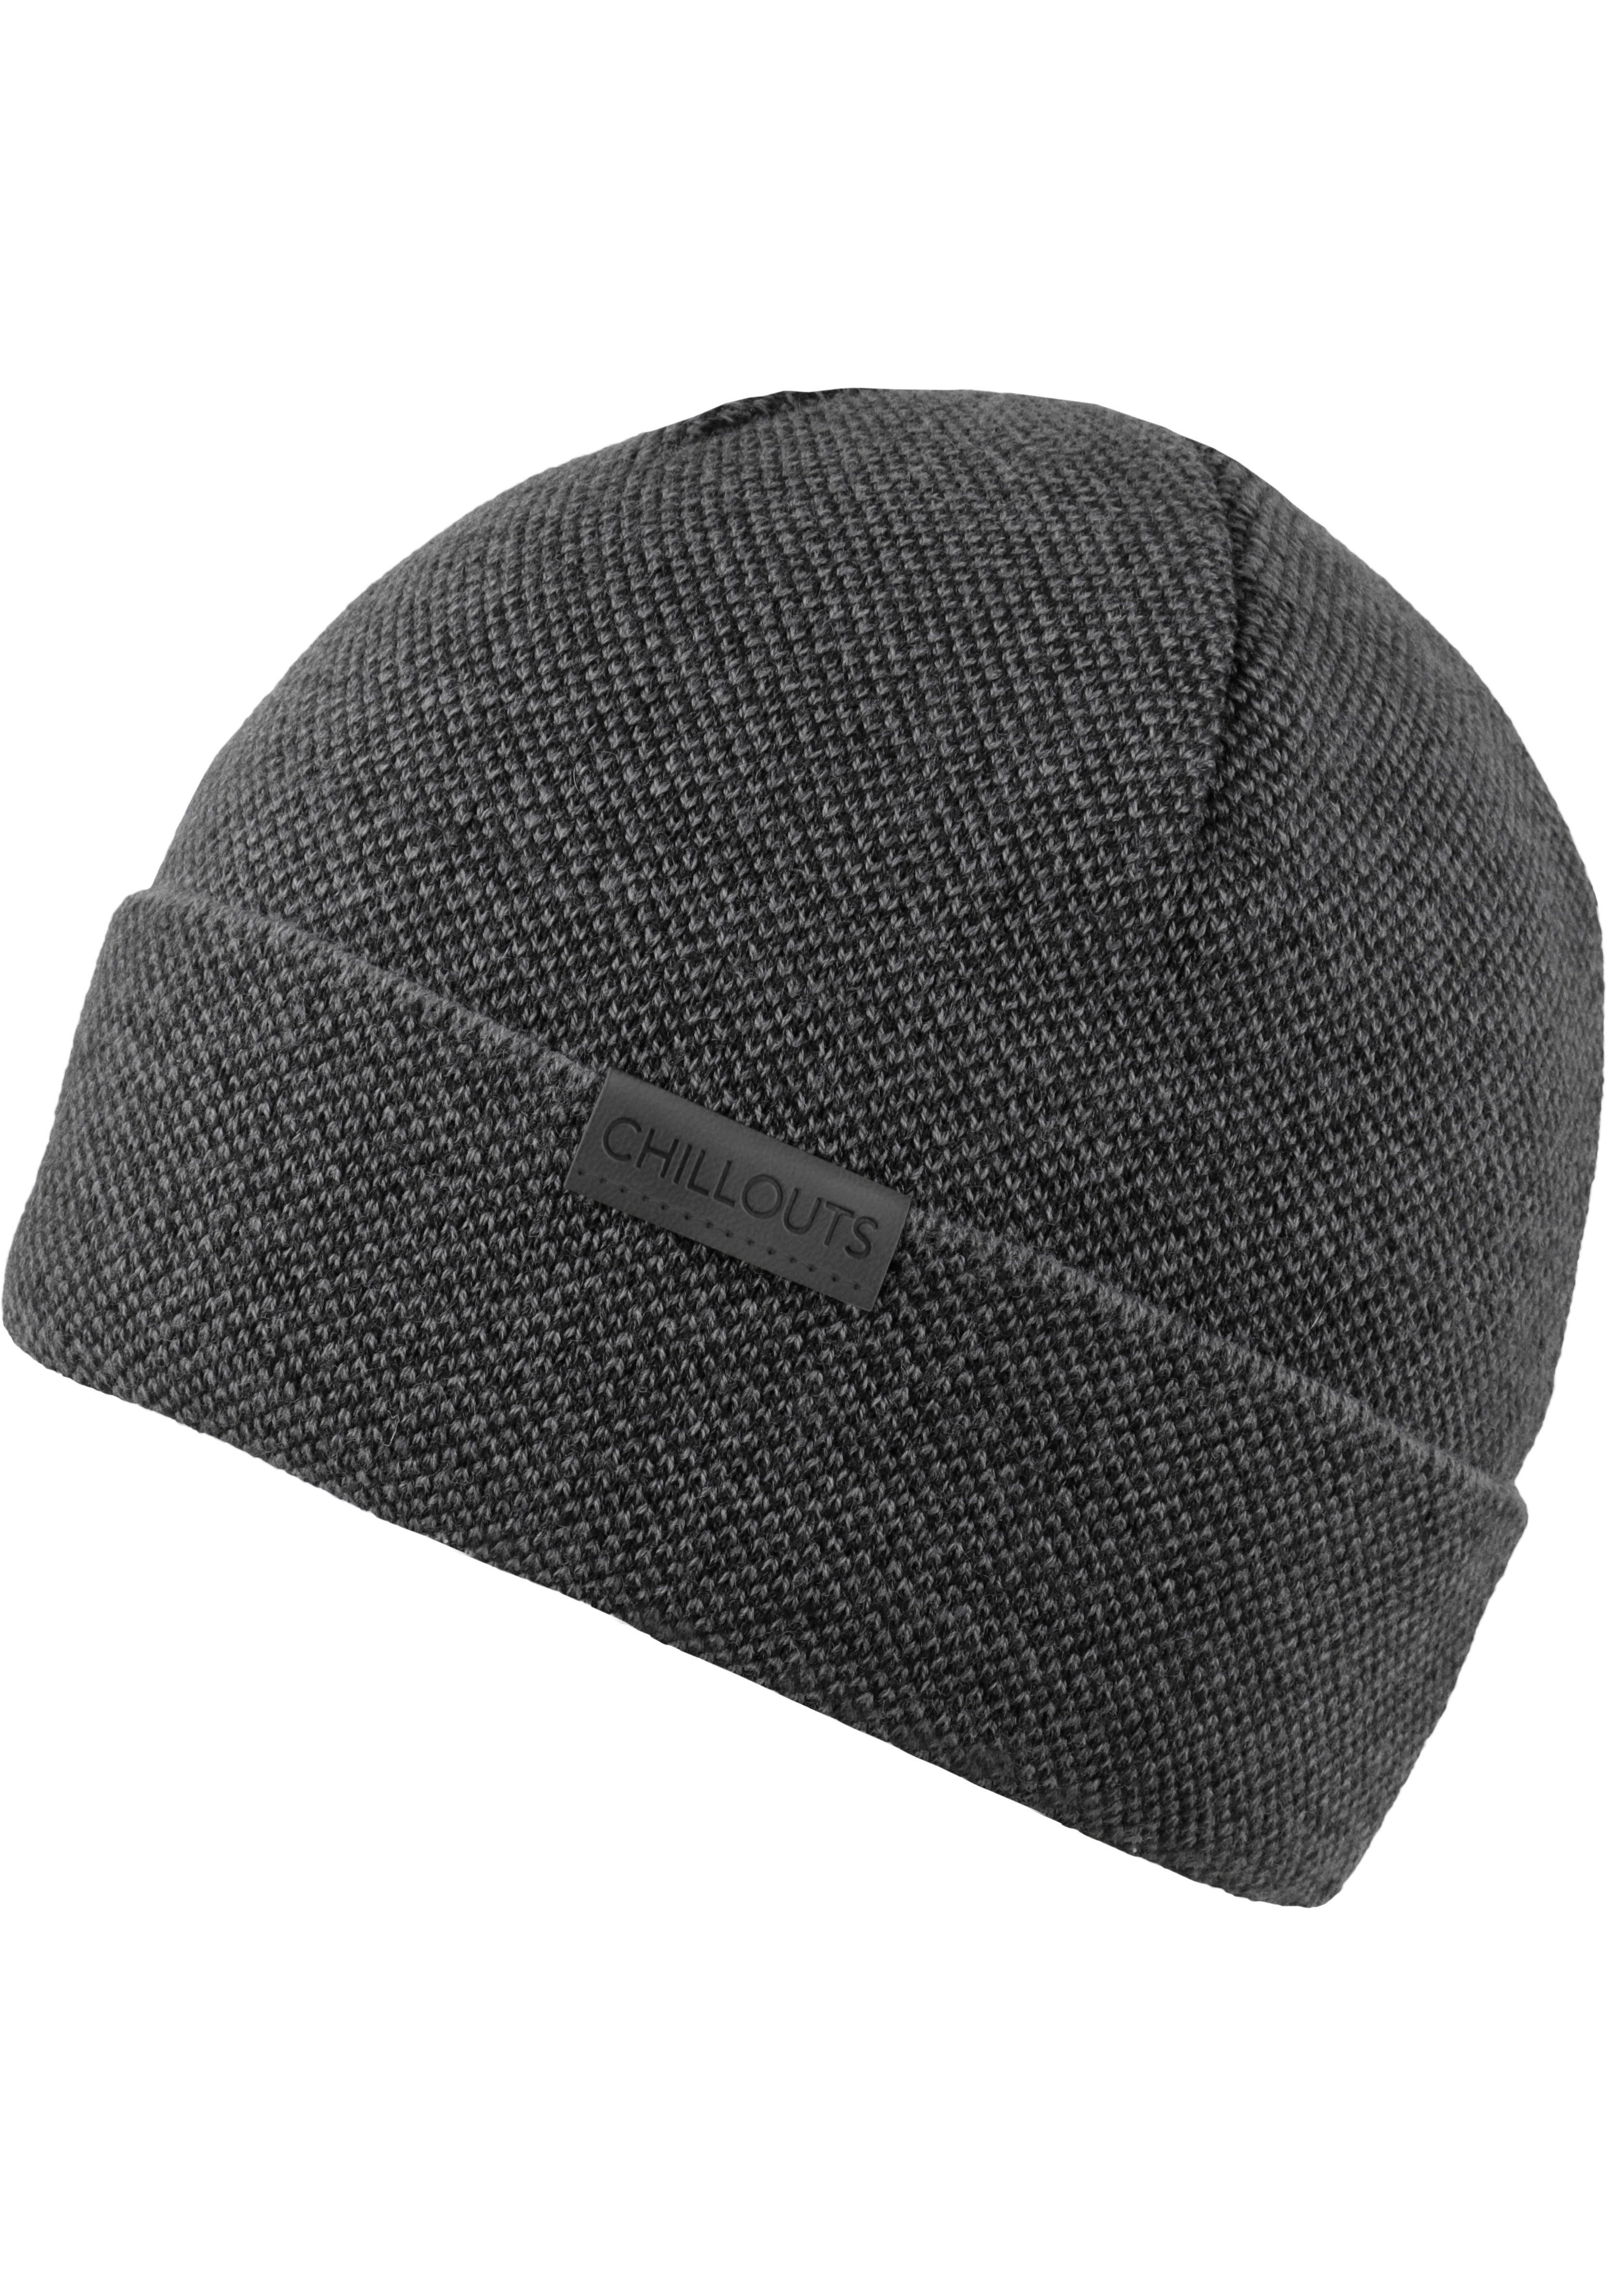 chillouts Strickmütze Kilian Hat grey dark